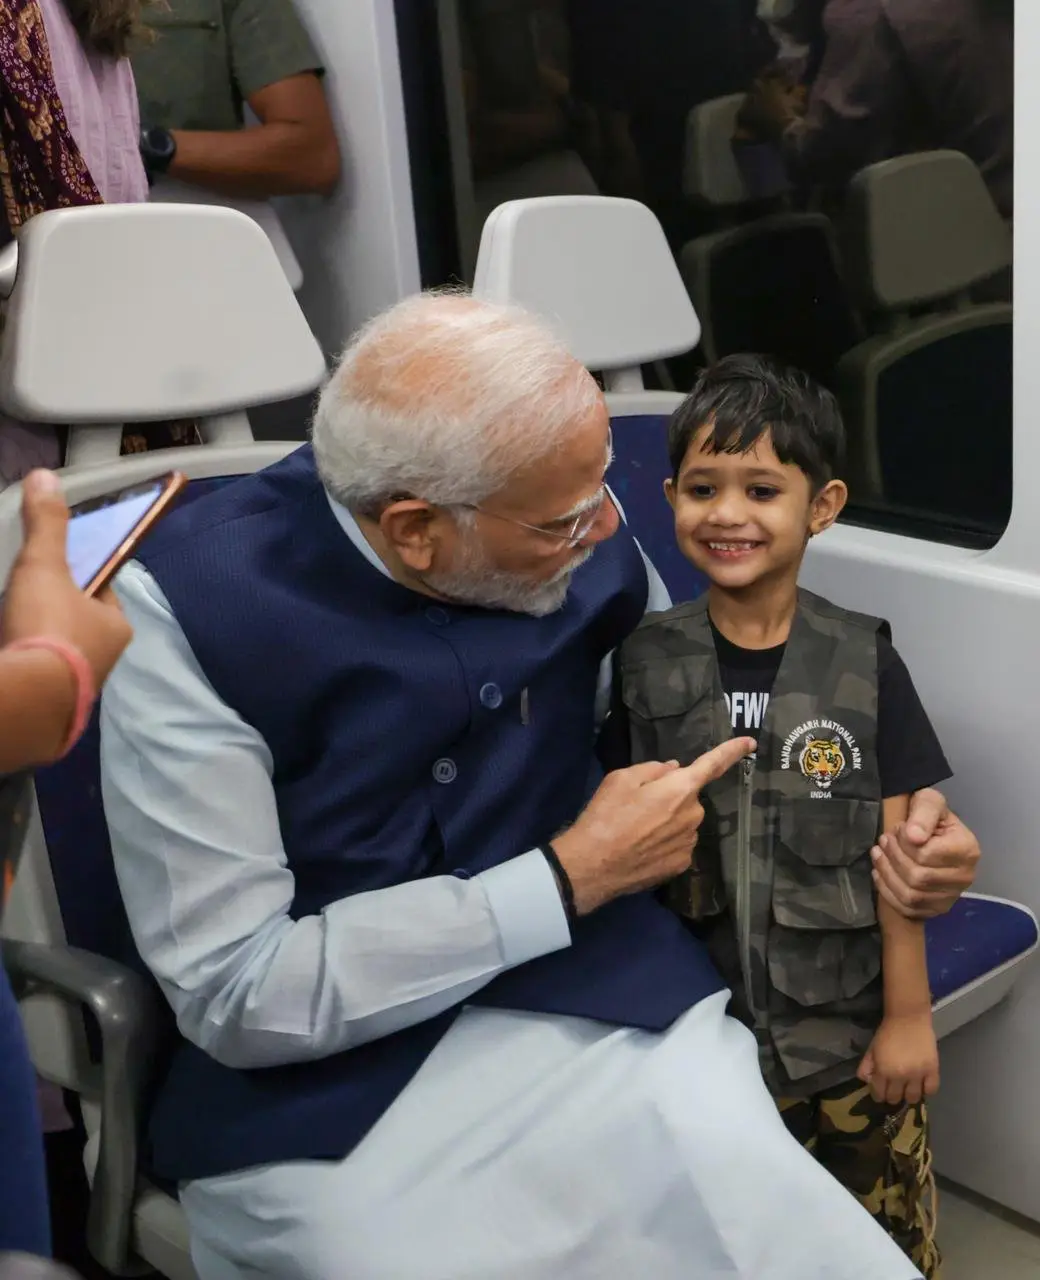 PM Modi travels in DelhiMetro  